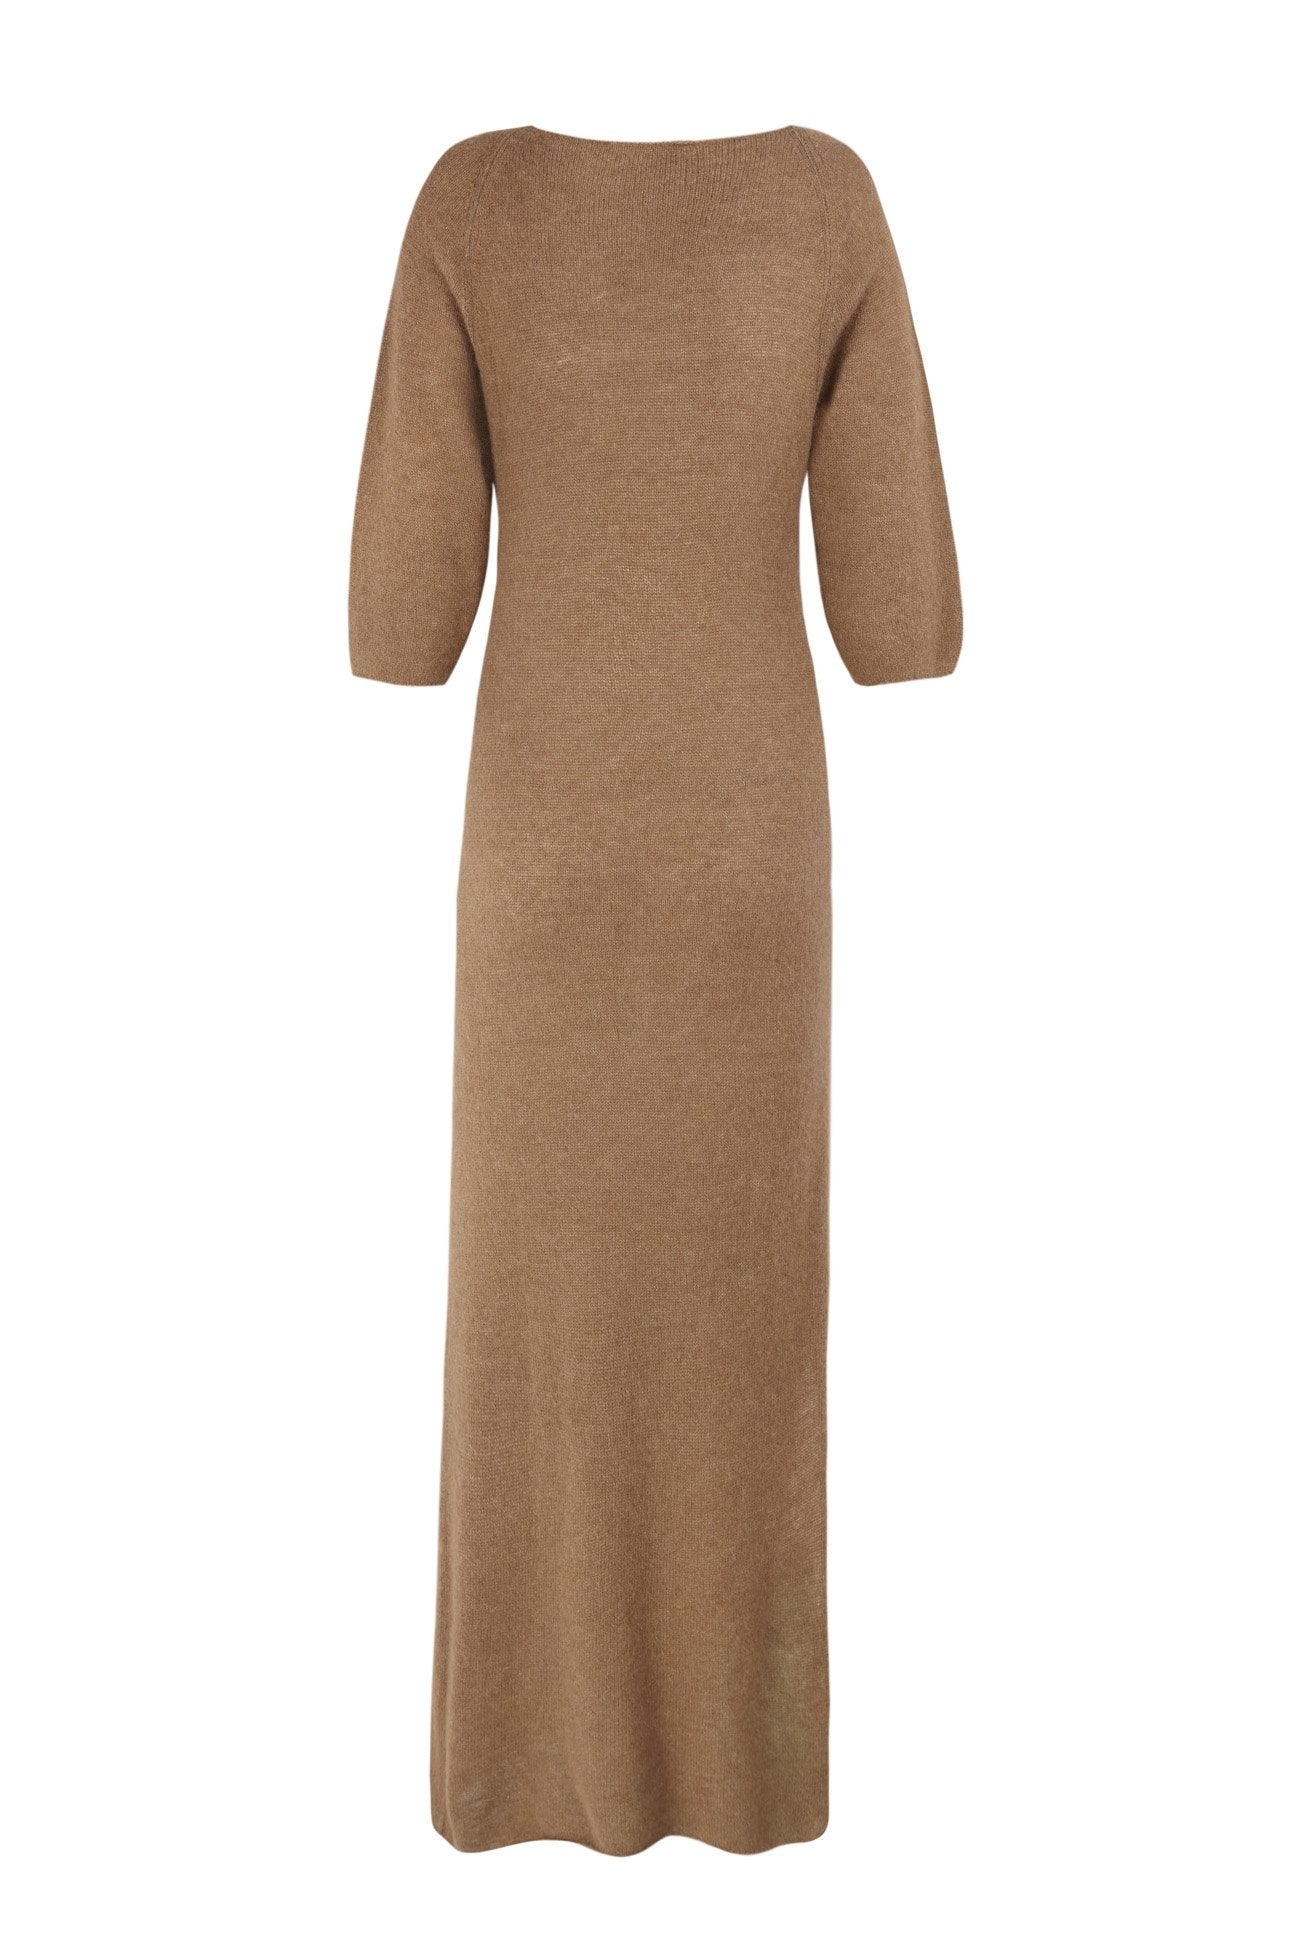 Diandra, cinnamon dress in baby alpaca, cashmere and silk